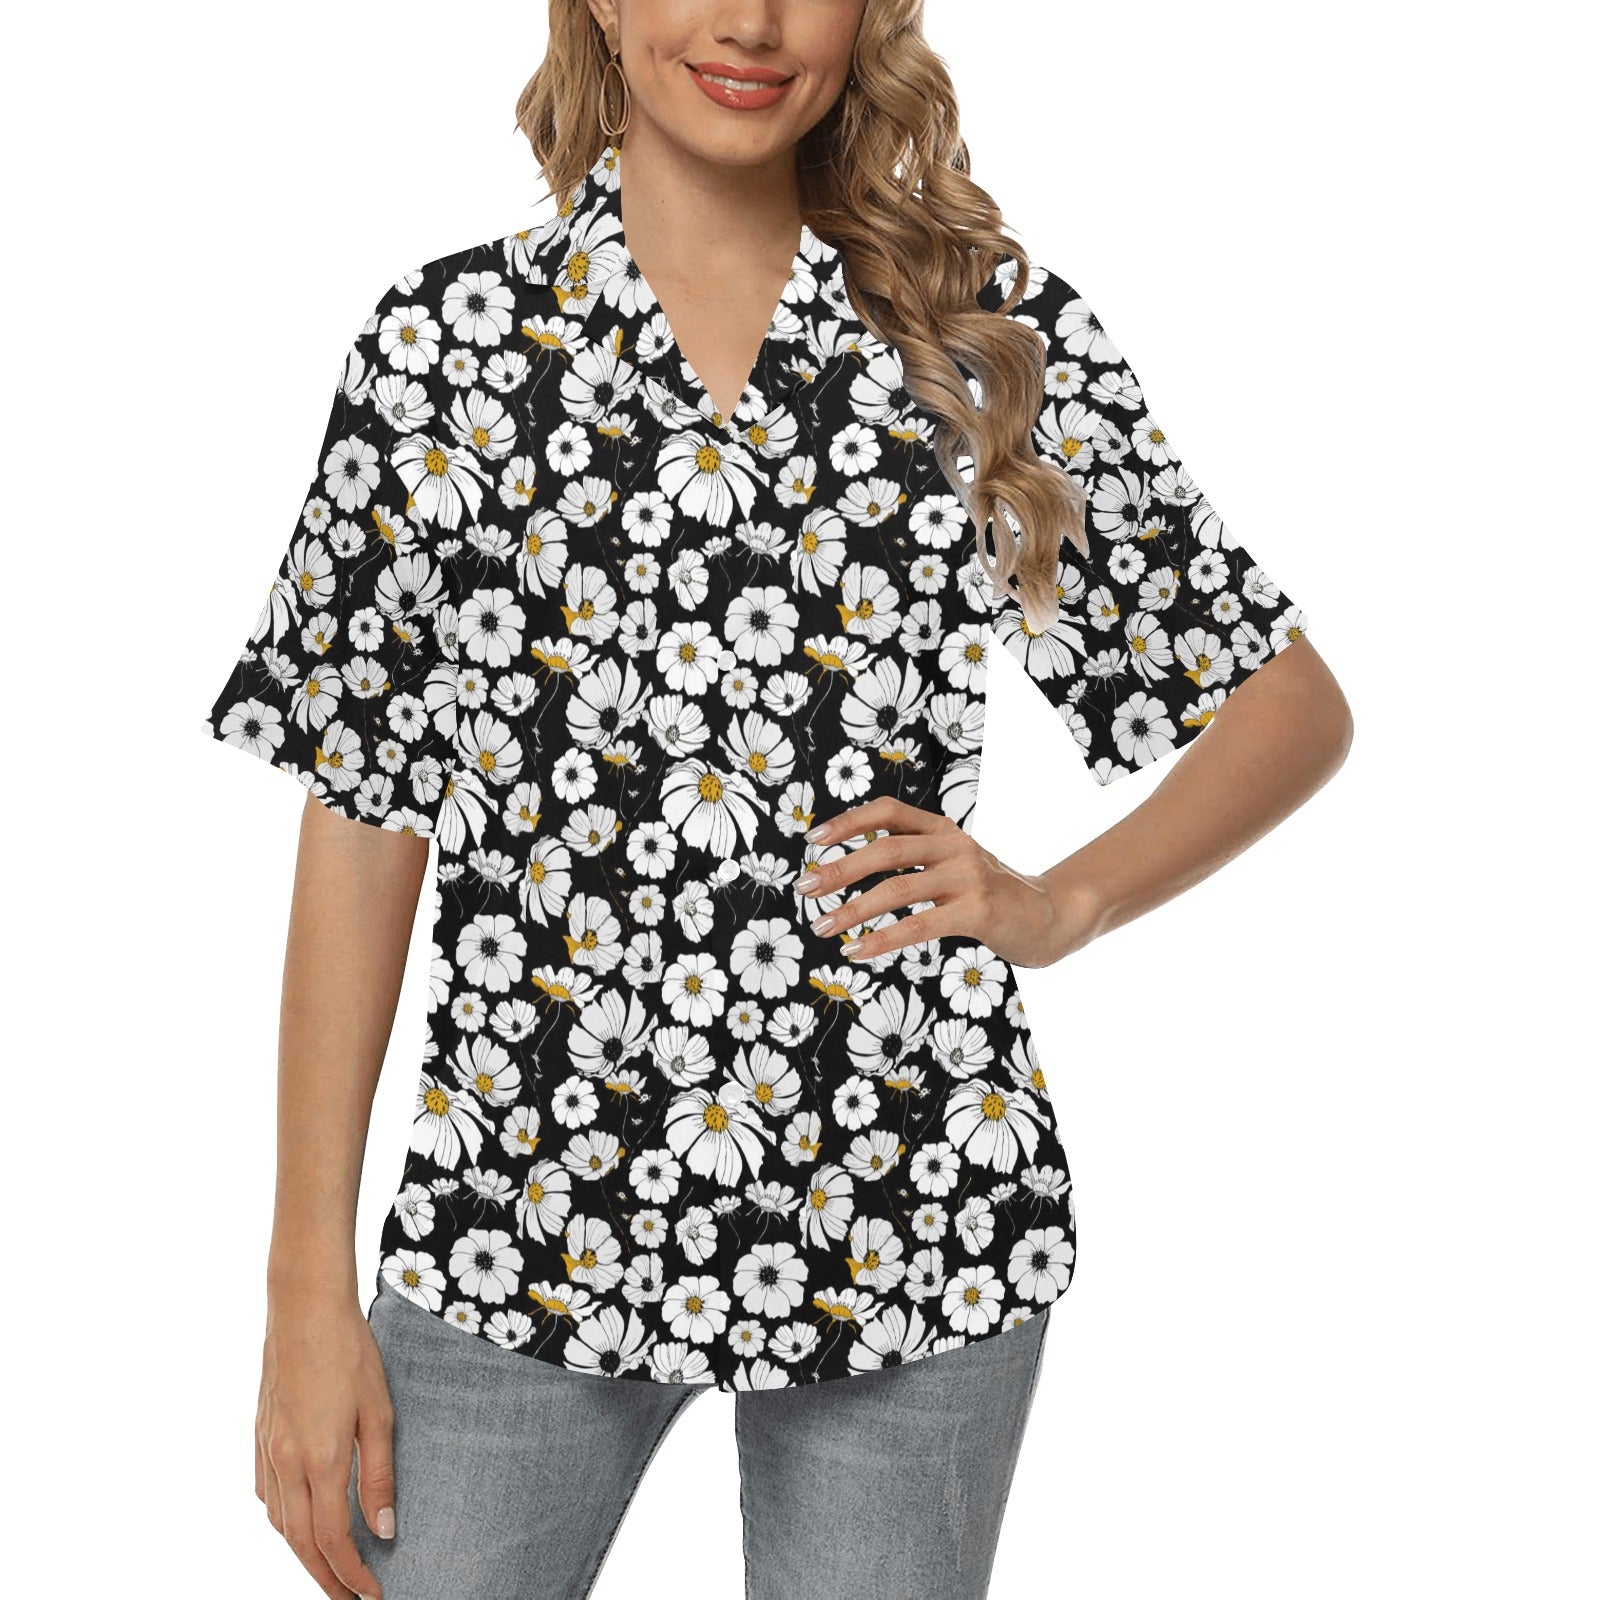 Daisy Pattern Print Design 02 Women's Hawaiian Shirt